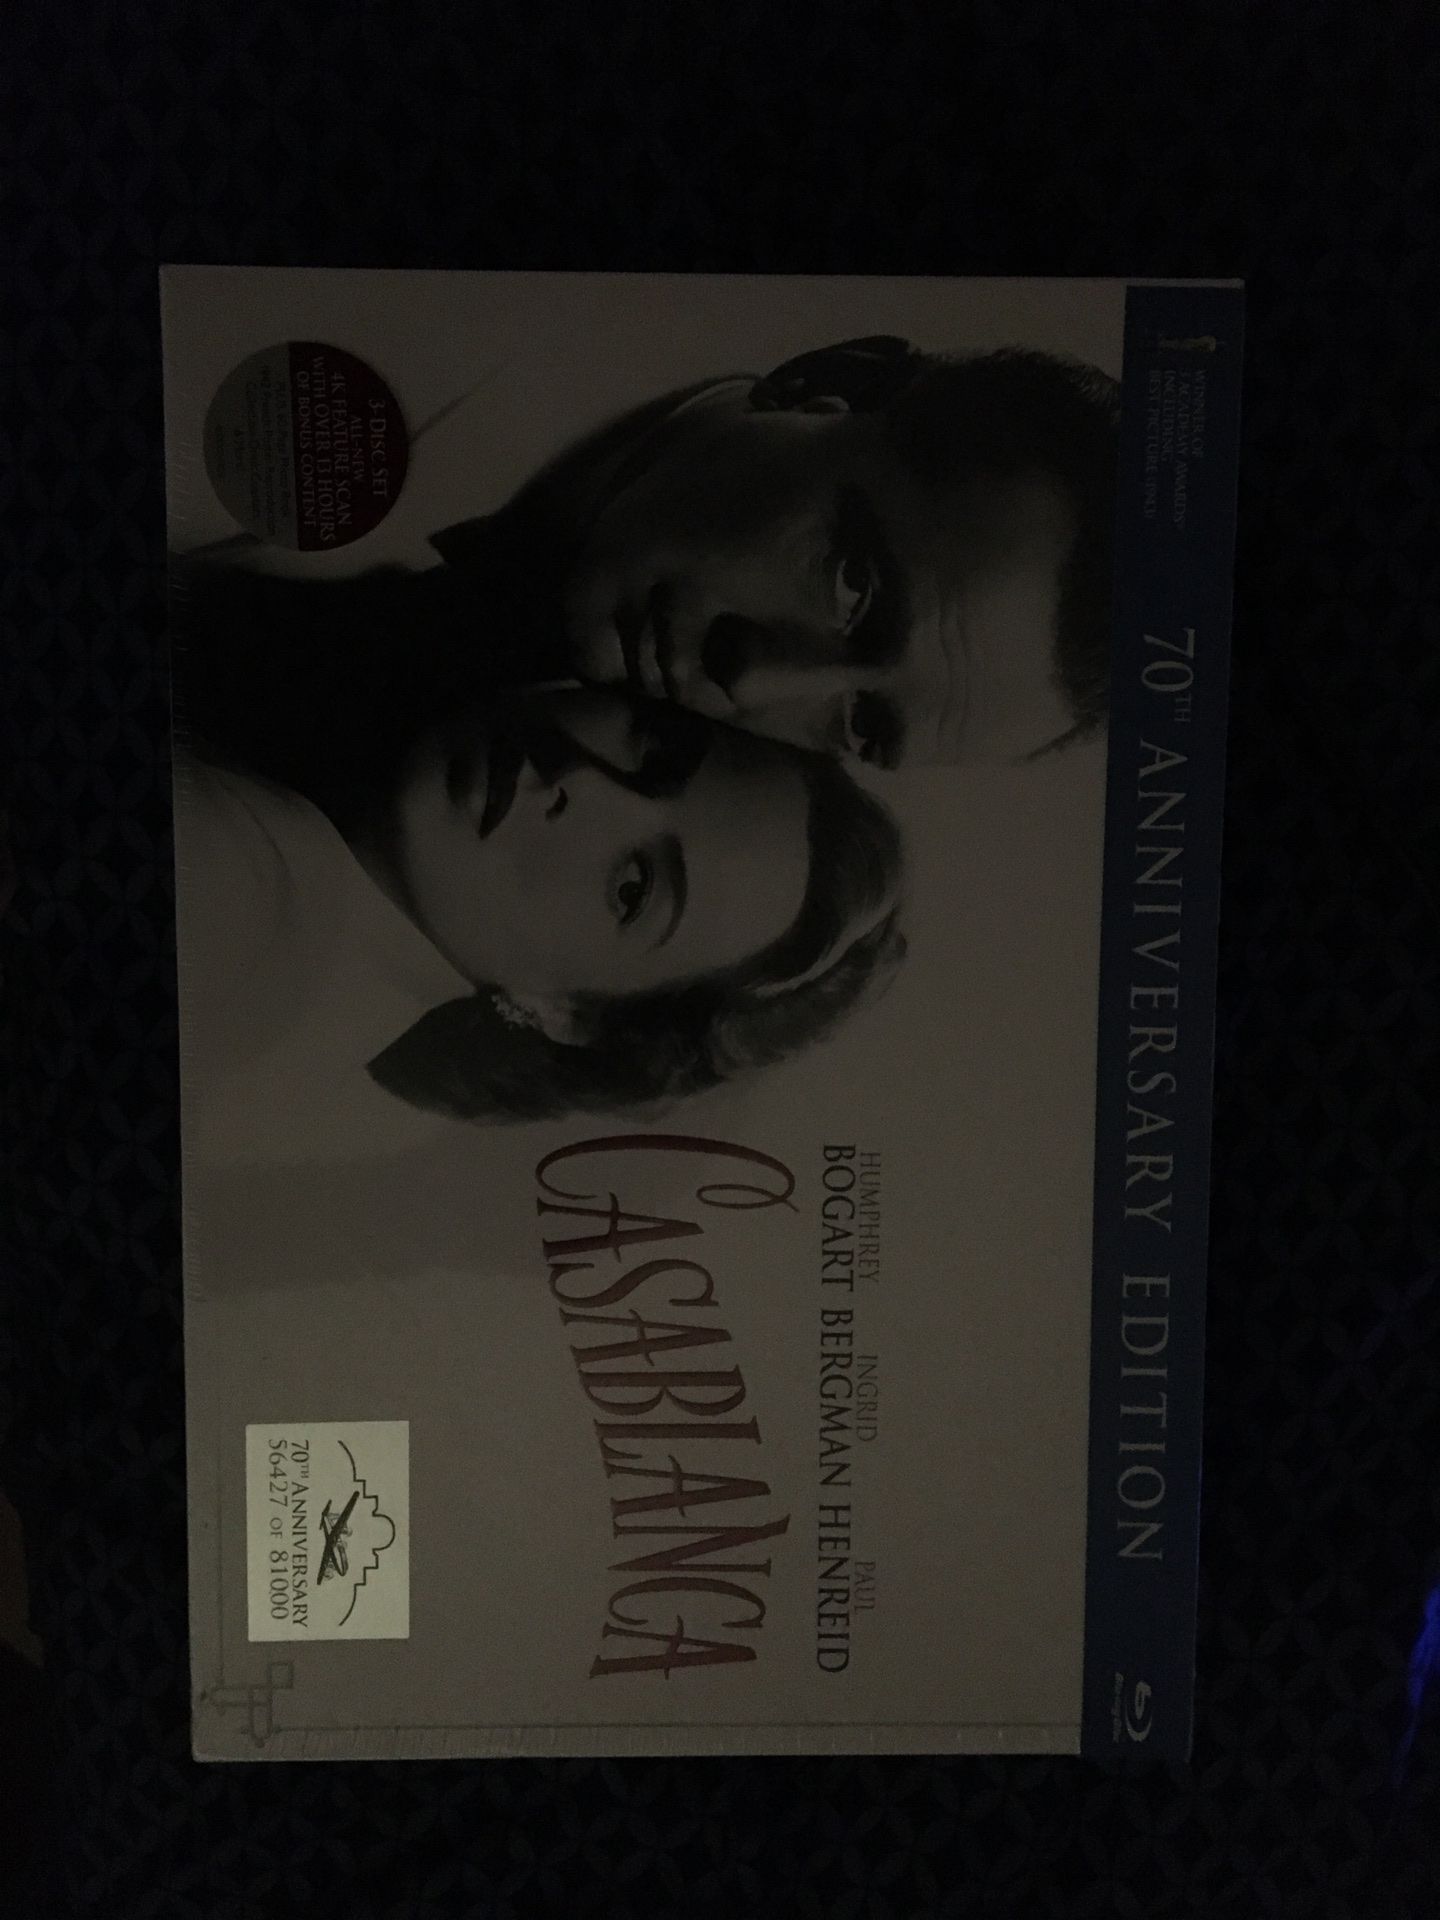 Casablanca Blu-Ray set 70th anniversary edition